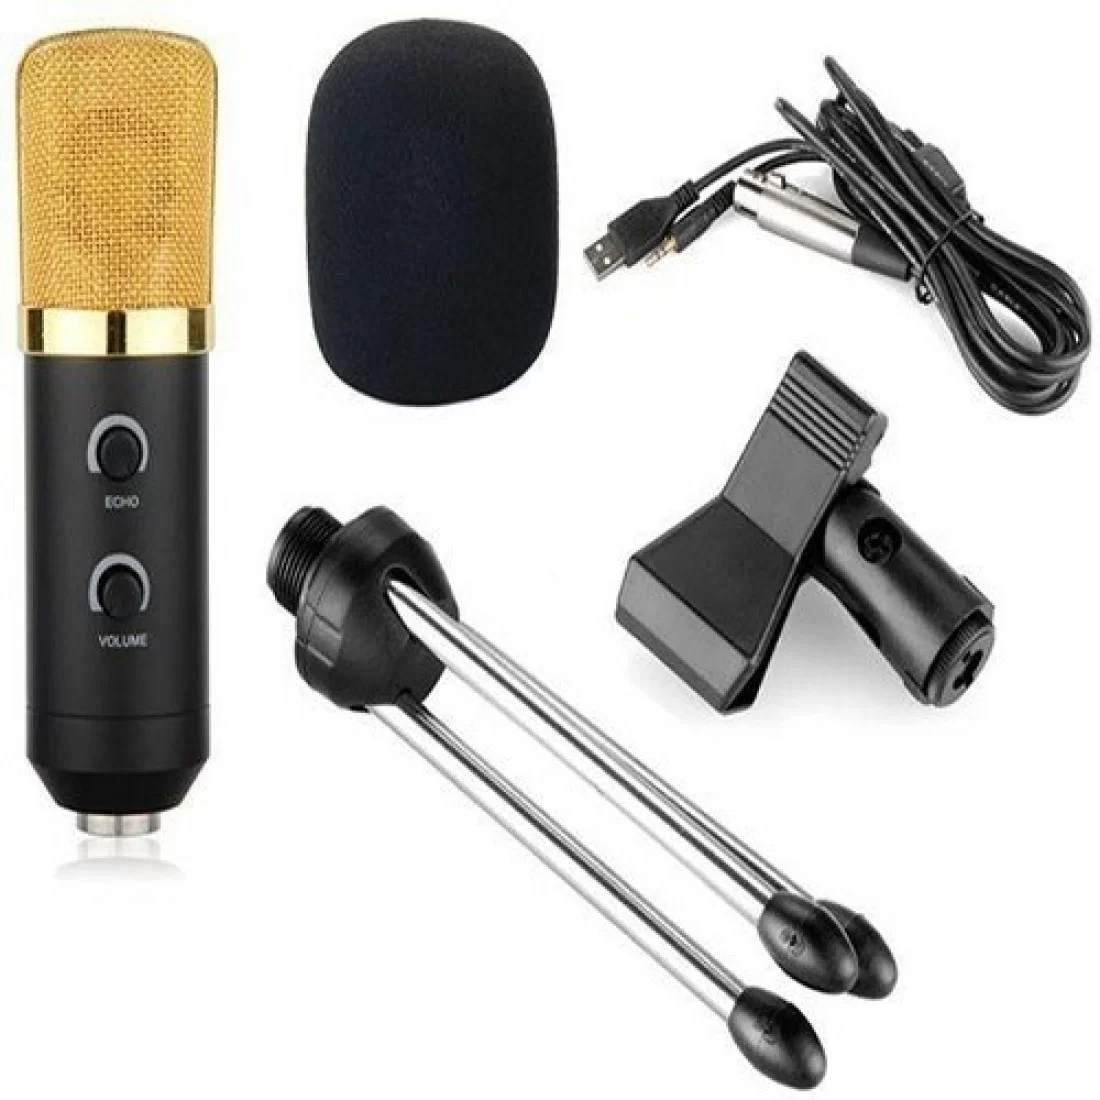 BM-100FX Professional Condenser Microphone